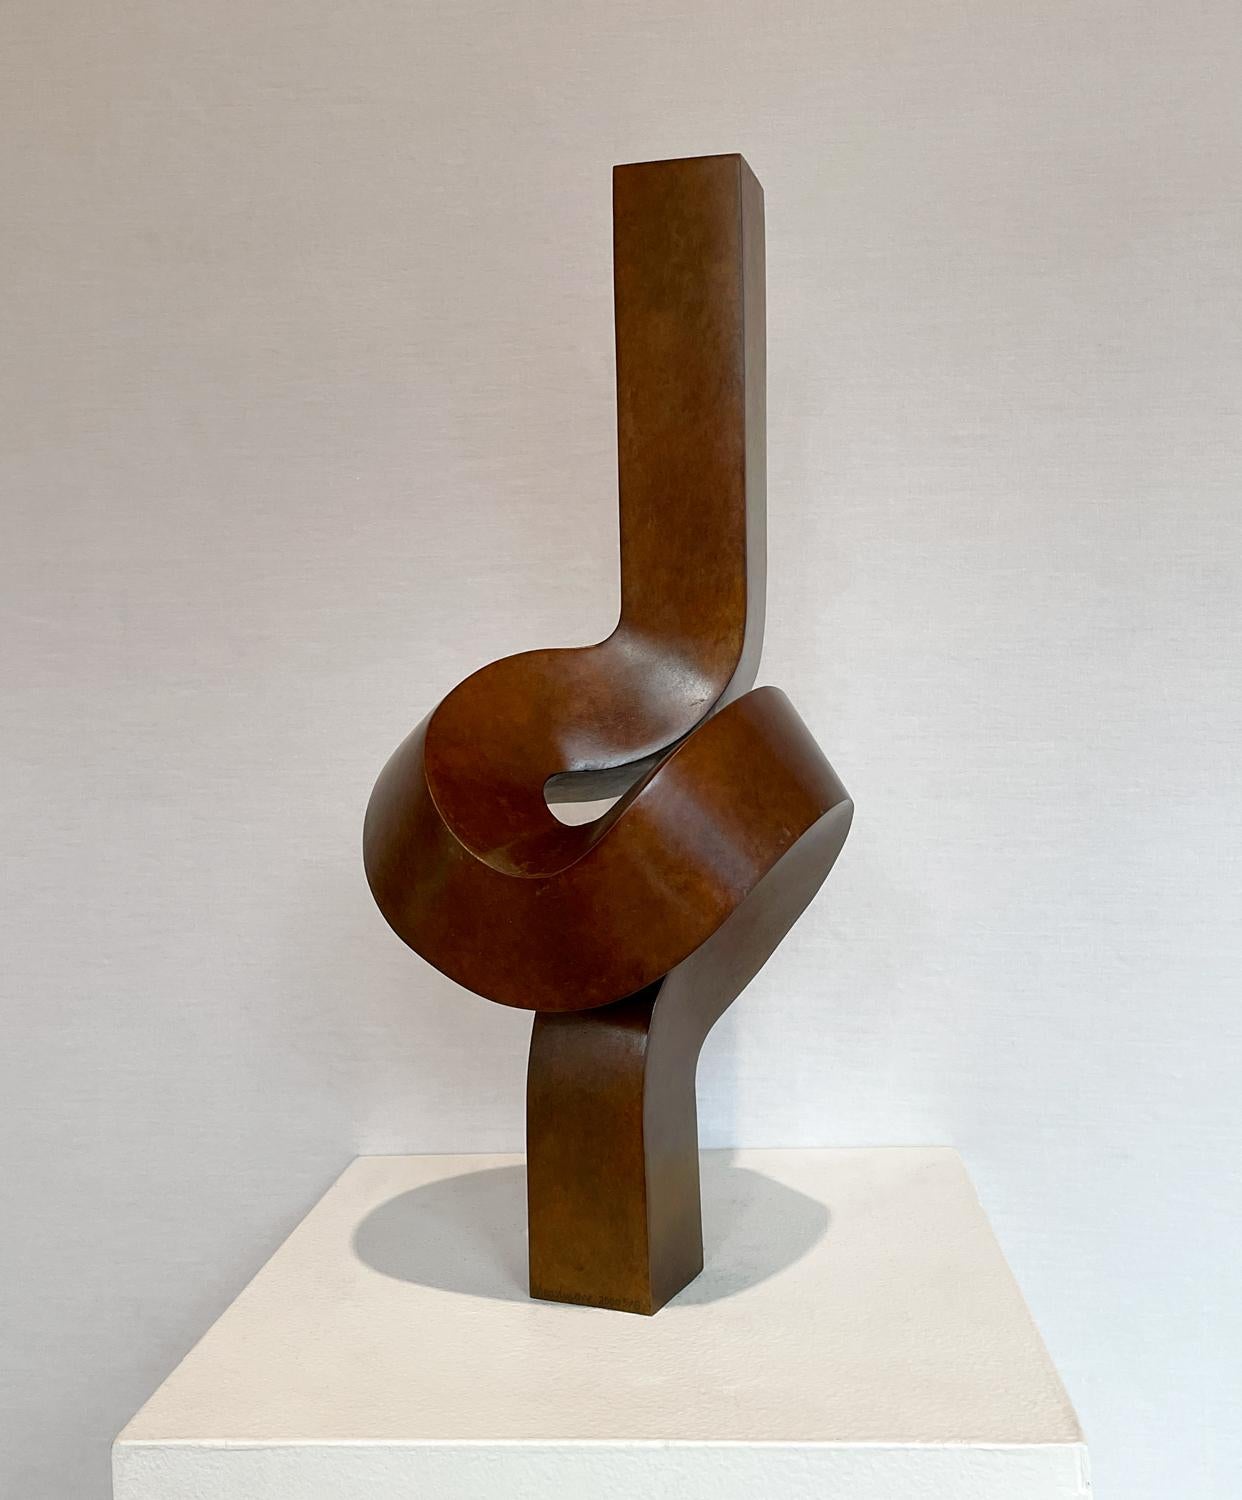 Clement Meadmore Abstract Sculpture - "Upright" minimalist bronze sculpture 